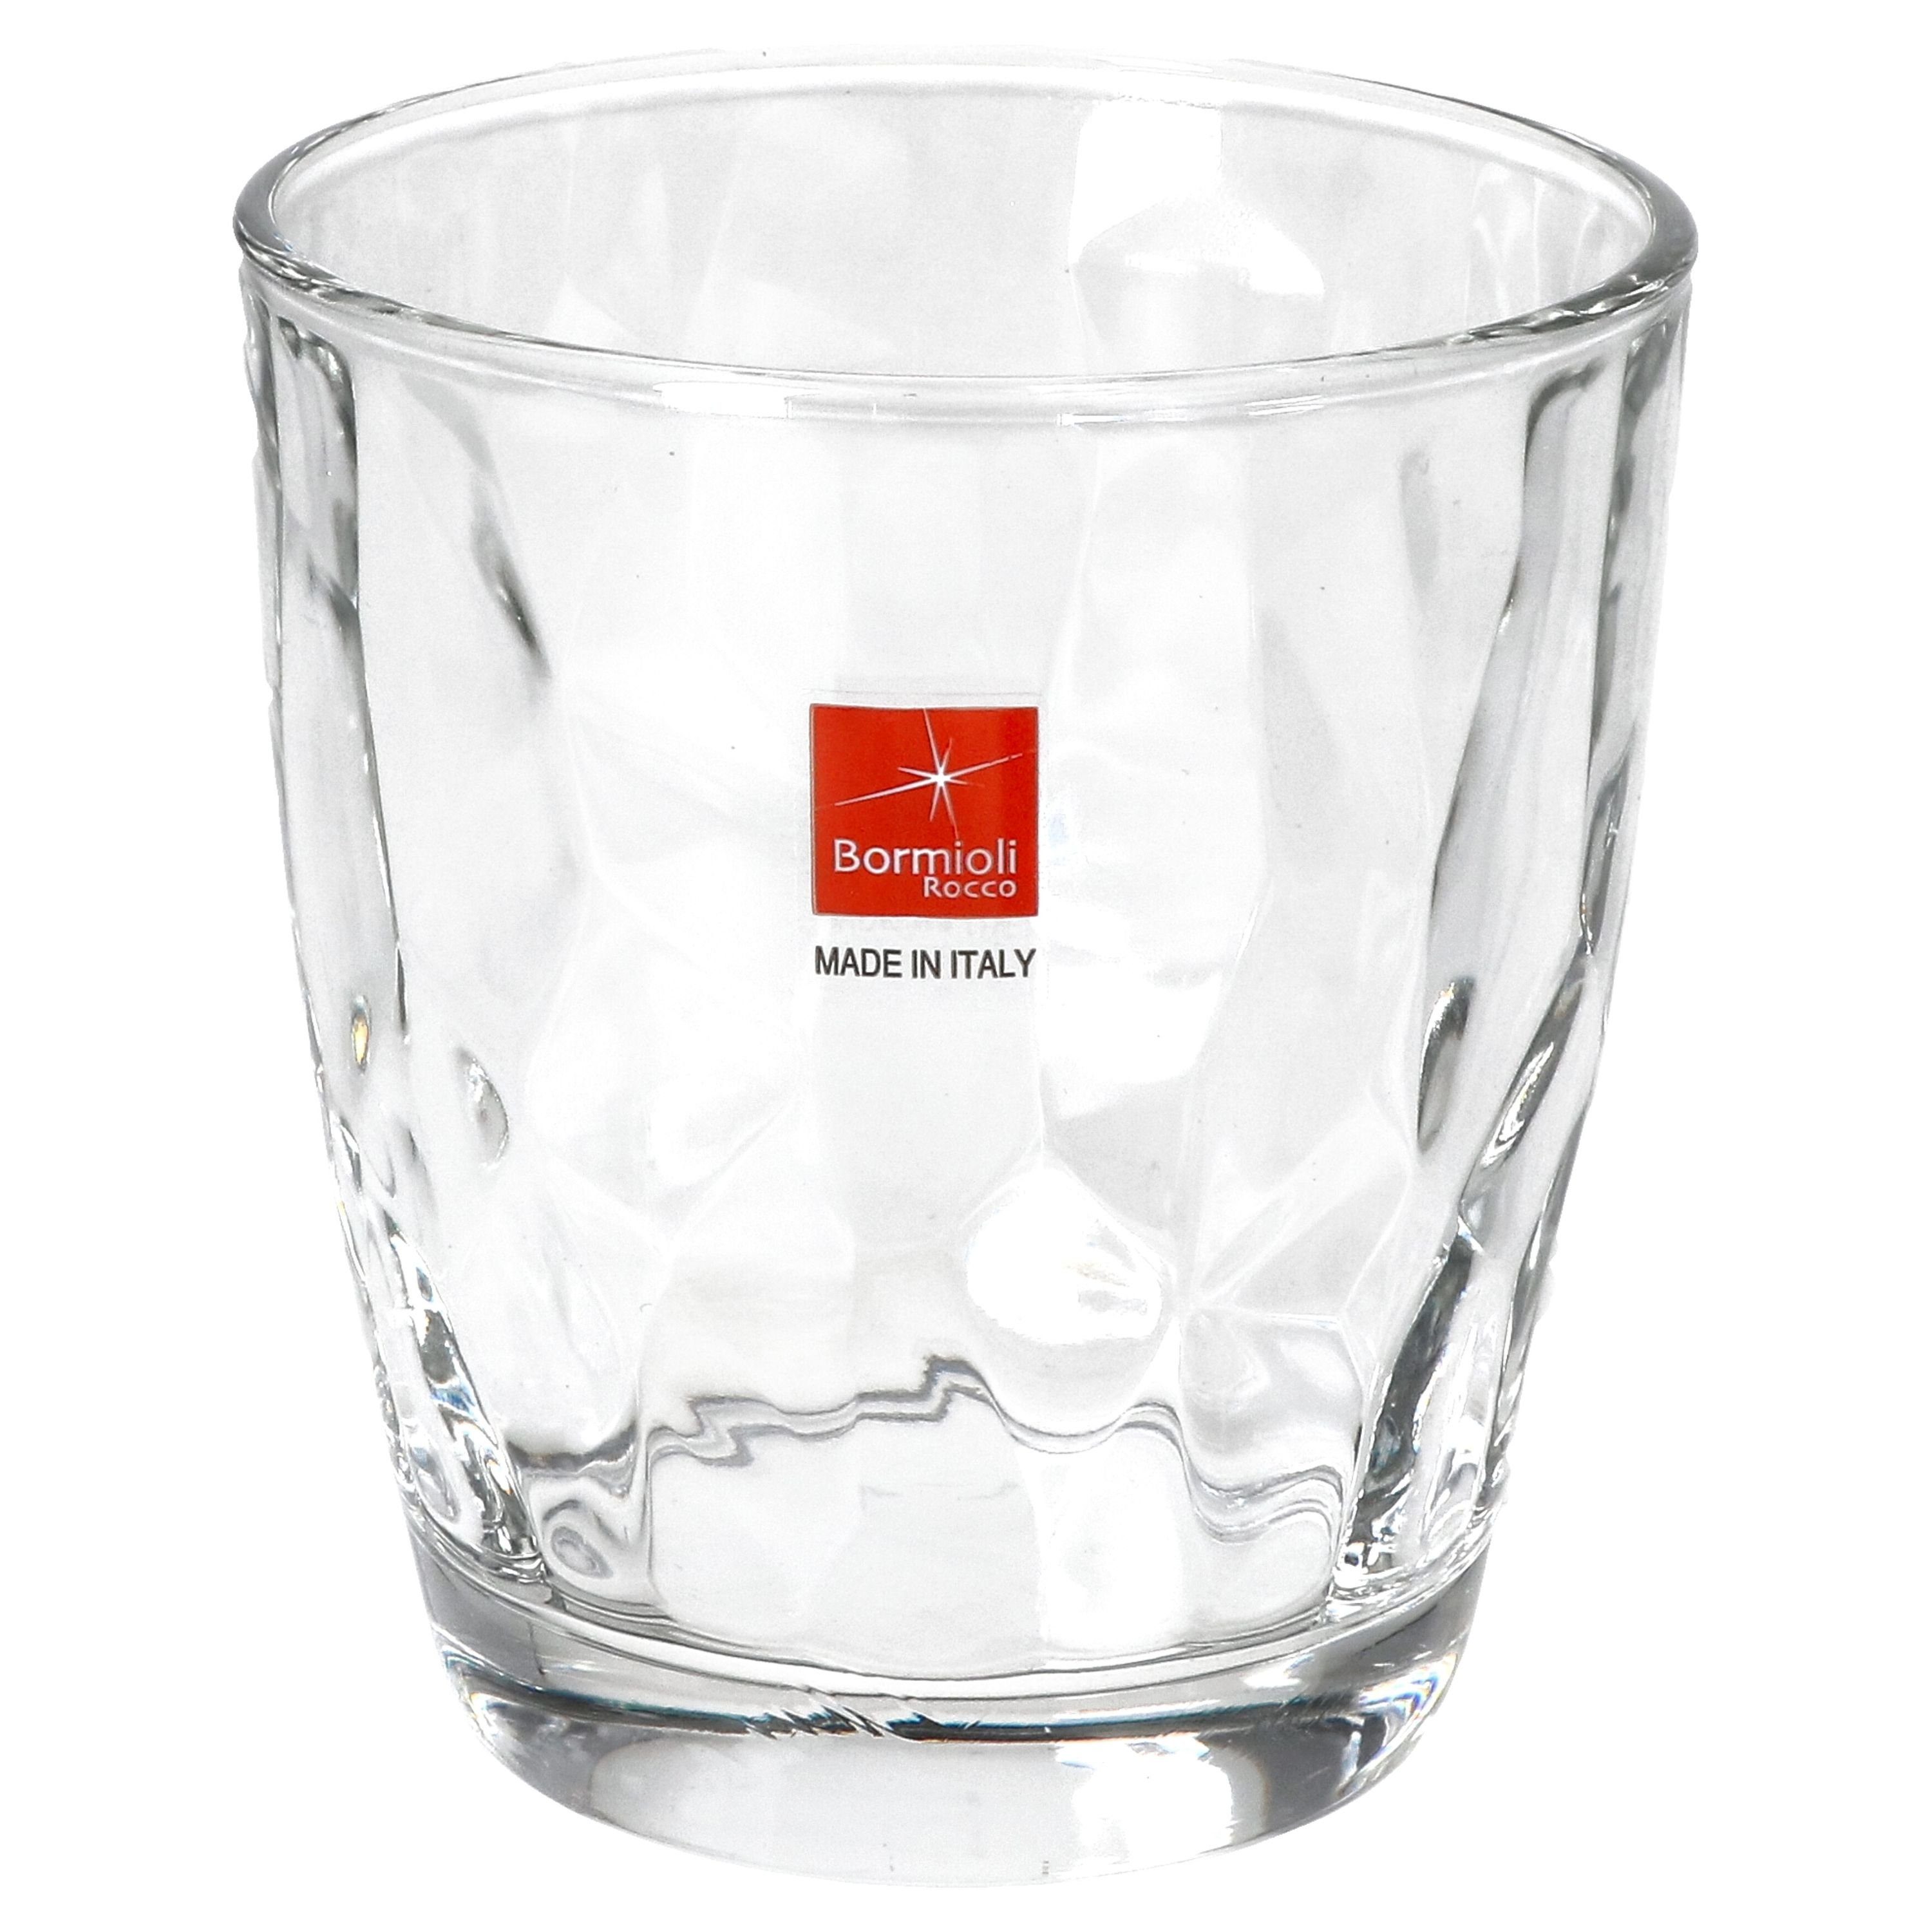 MamboCat Glas Set Gin-Tumbler D.O.F. Glas Transparent 390ml Diamond 12er Whisky, Trinkglas